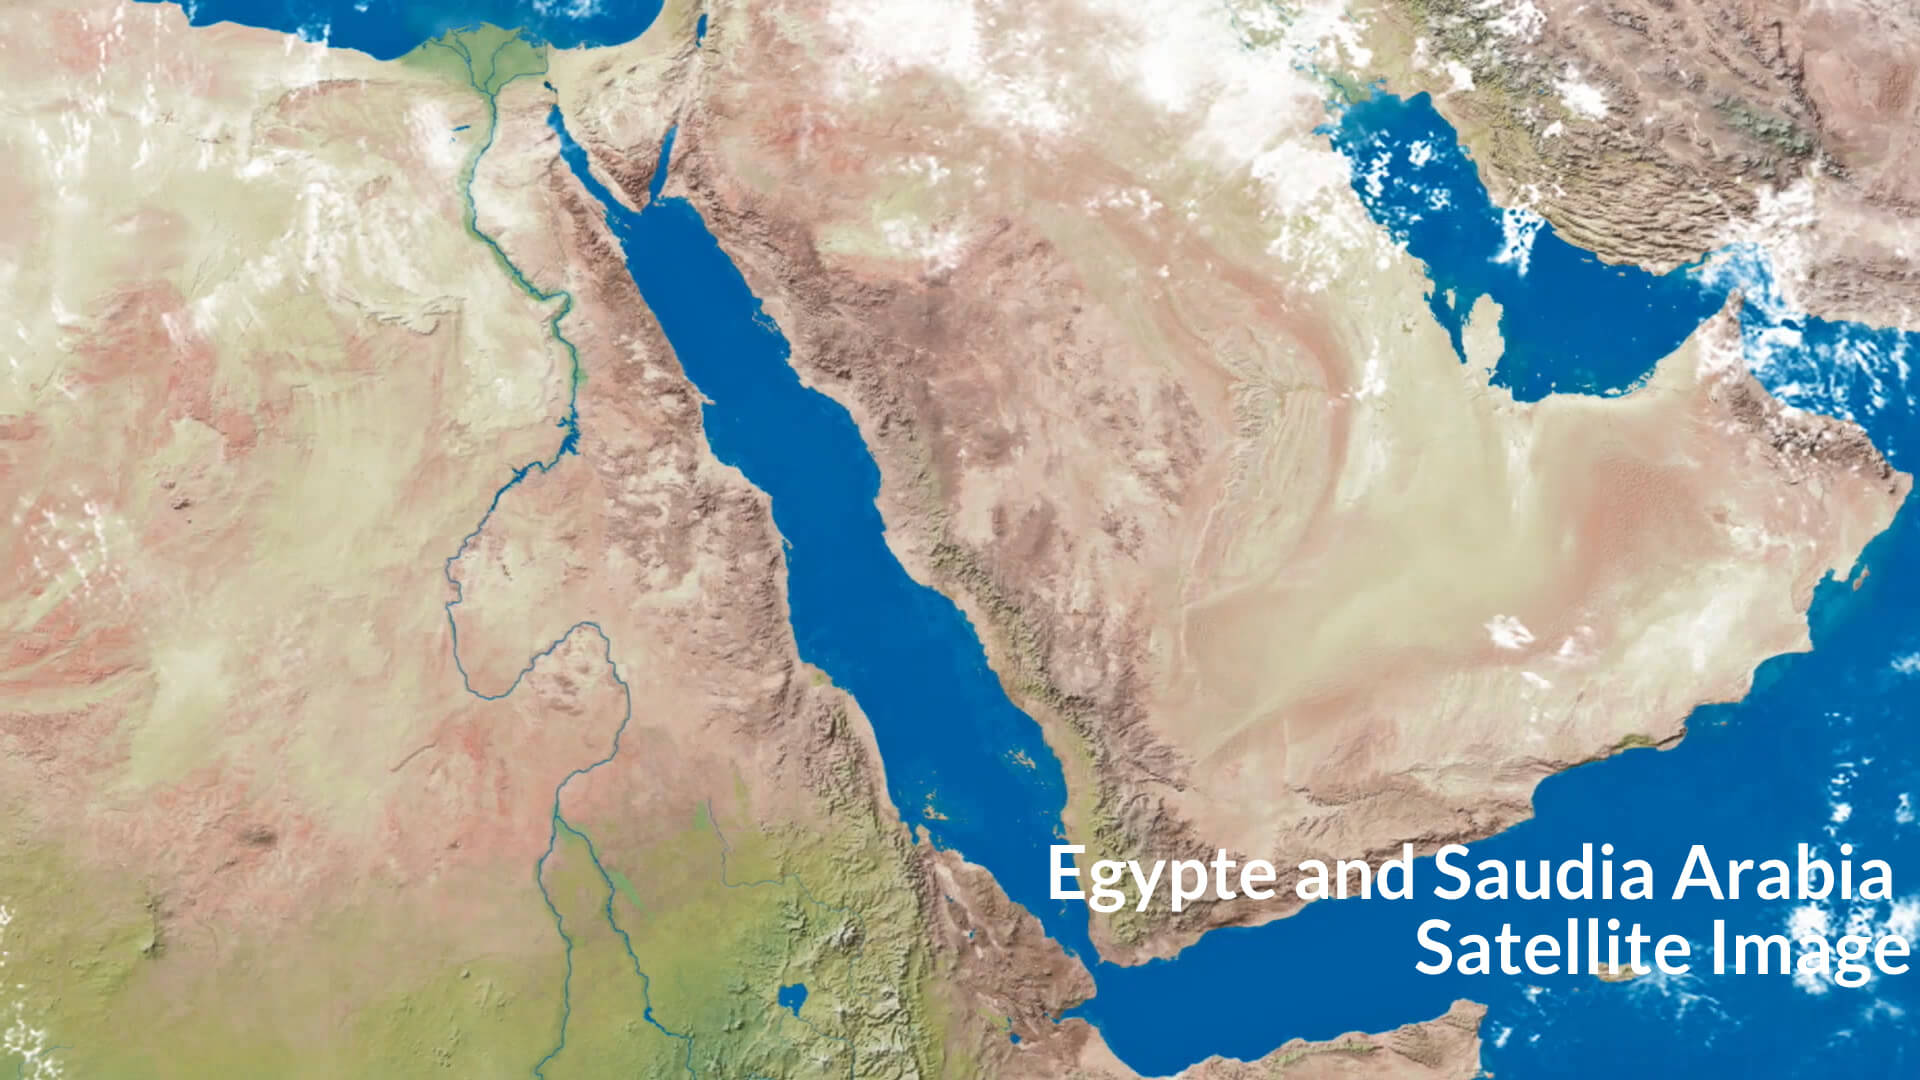 Egypte and Saudia Arabia Satellite Image